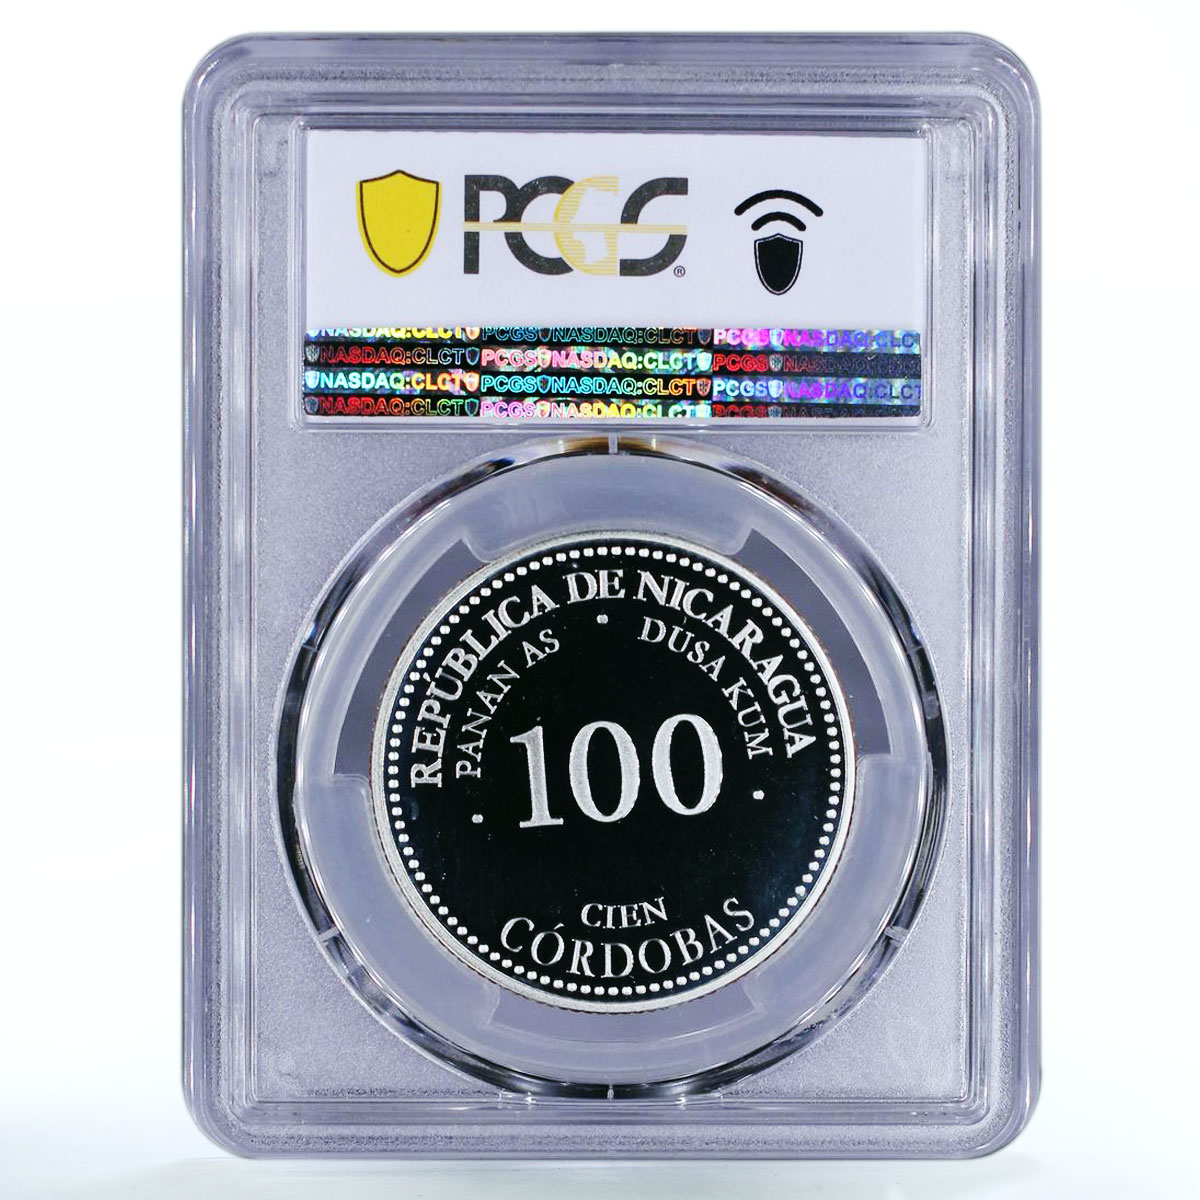 Nicaragua 100 cordobas 100 Anniversary of Cordoba PR69 PCGS silver coin 2012